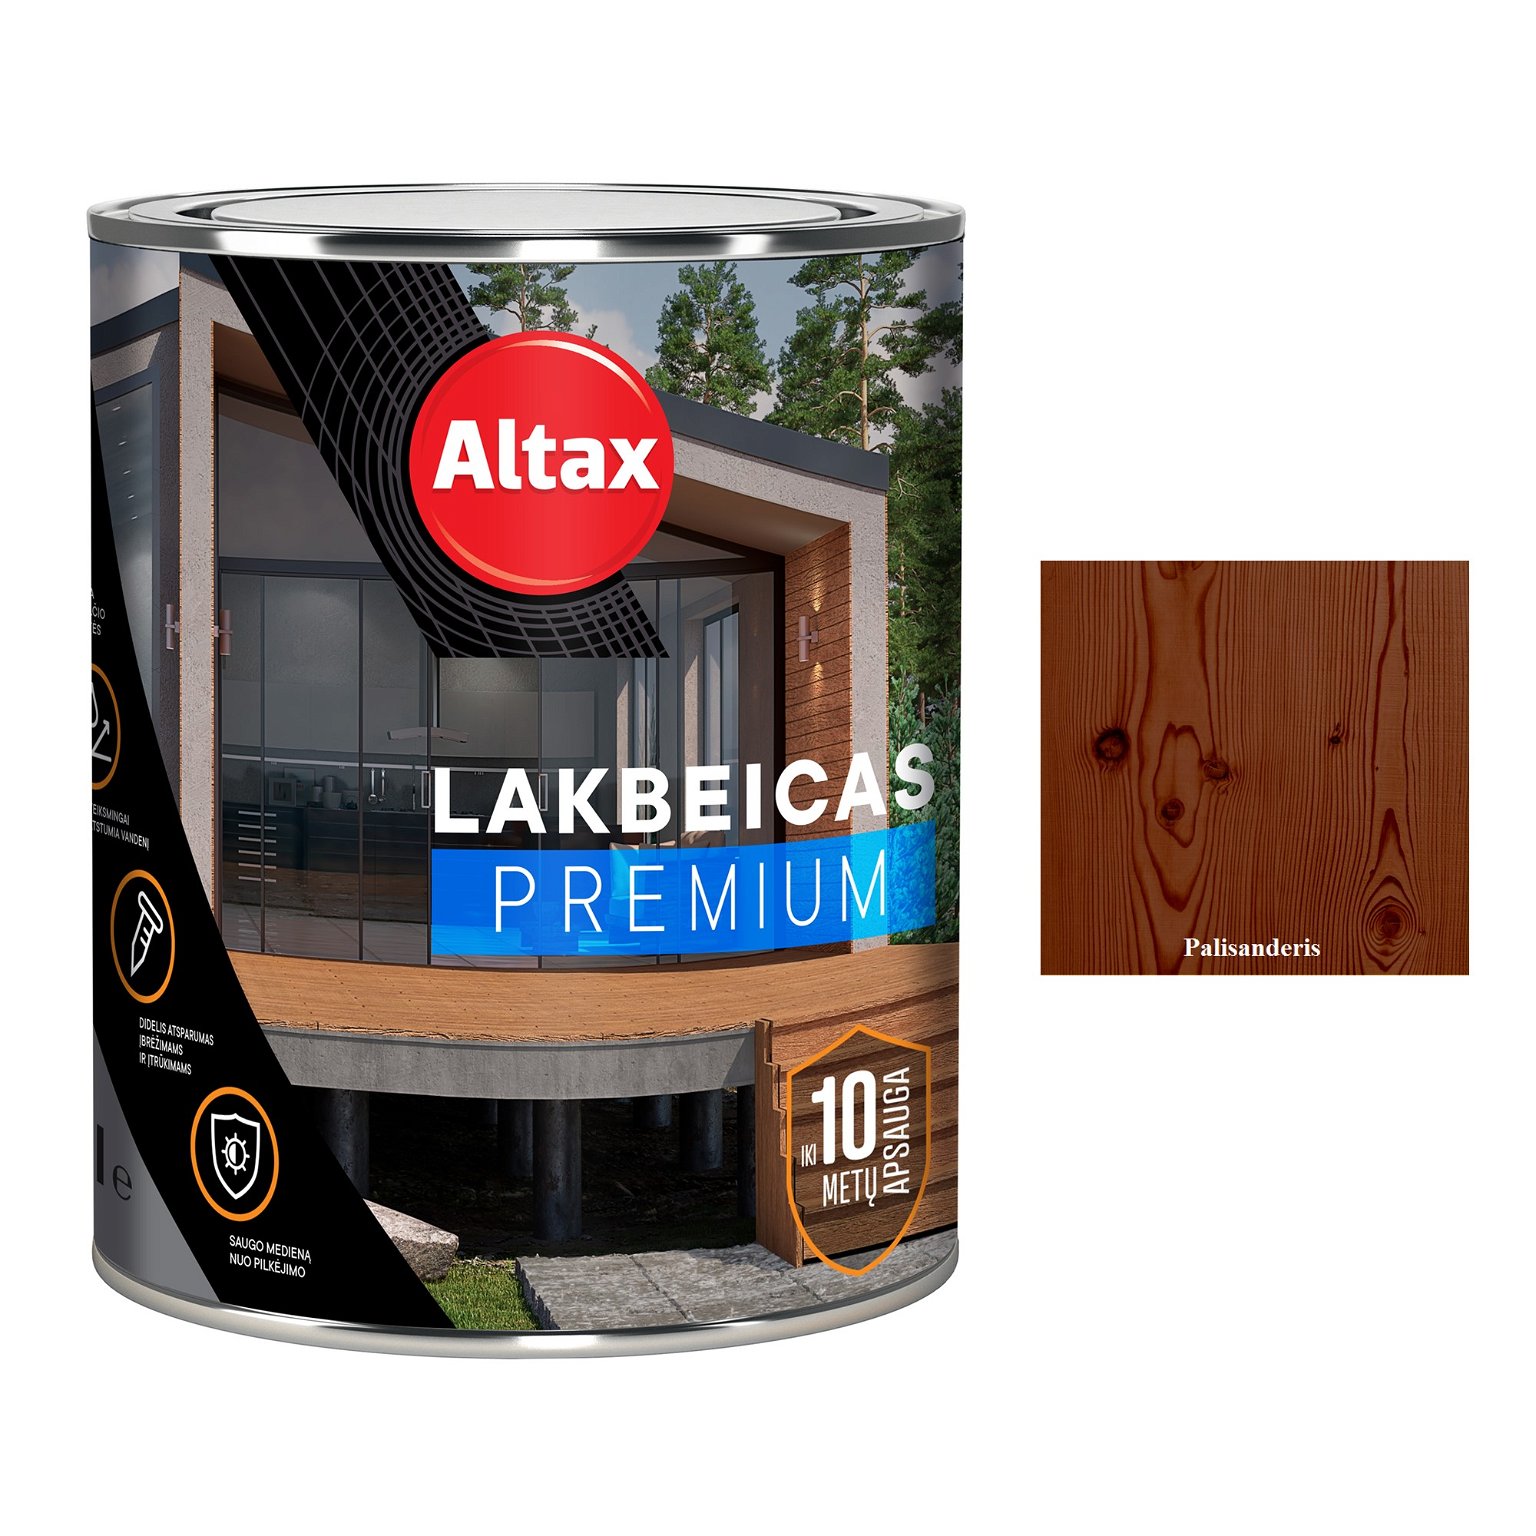 Medienos lakas su beicu ALTAX Premium, palisanderio sp., 750 ml